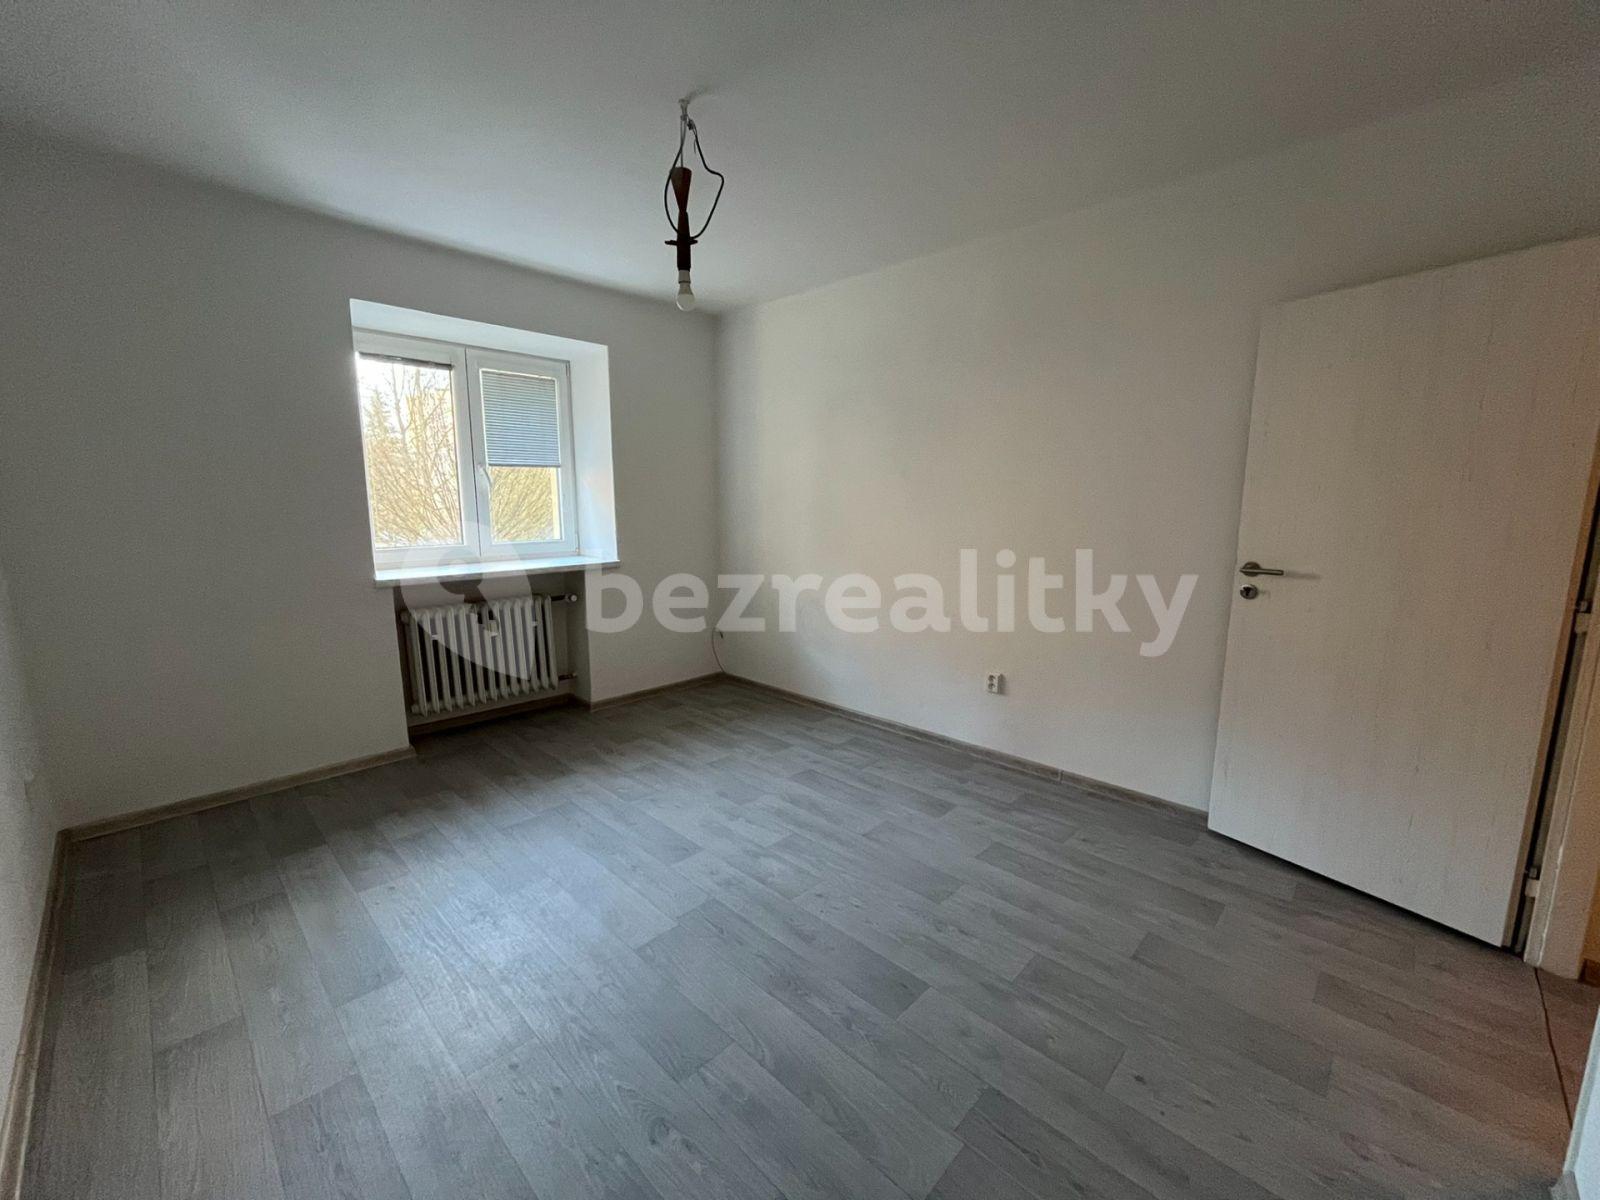 Prenájom bytu 2-izbový 52 m², Matouše Václavka, Vsetín, Zlínský kraj